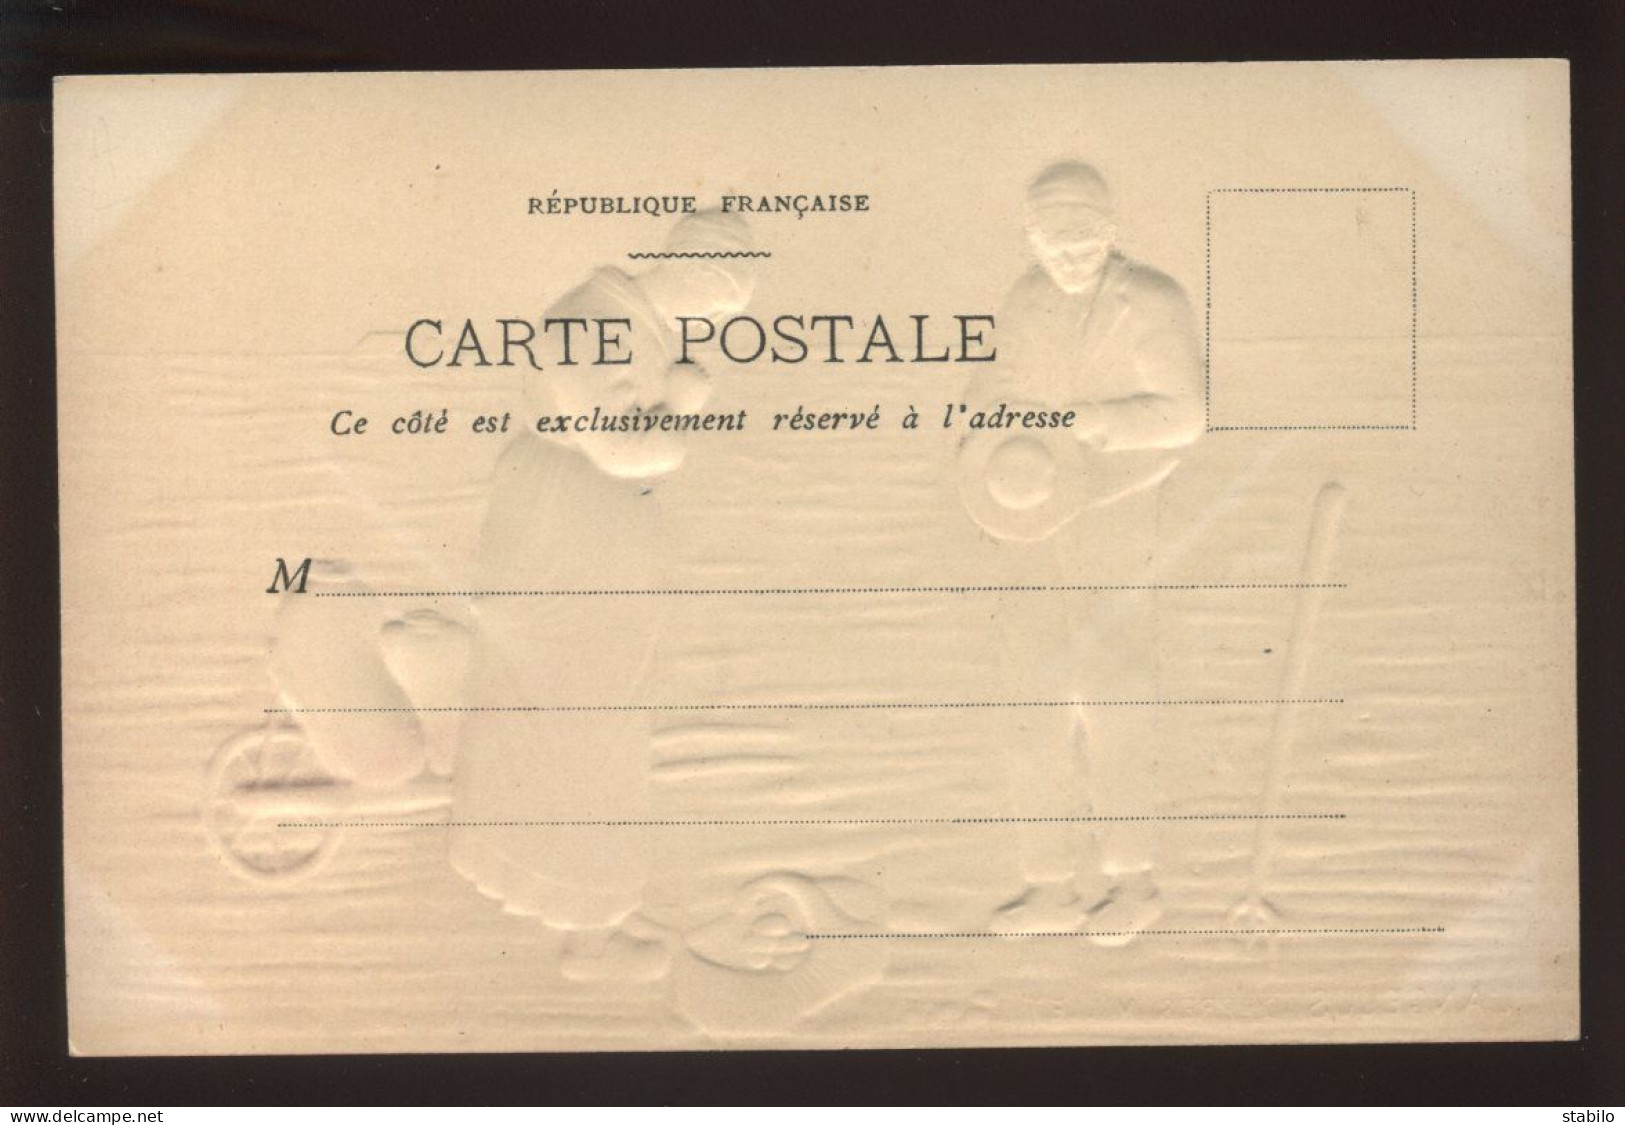 MATIERE - CARTE PORCELAINE GAUFREE -  "L' ANGELUS" TABLEAU DE MILLET - Porseleinkaarten